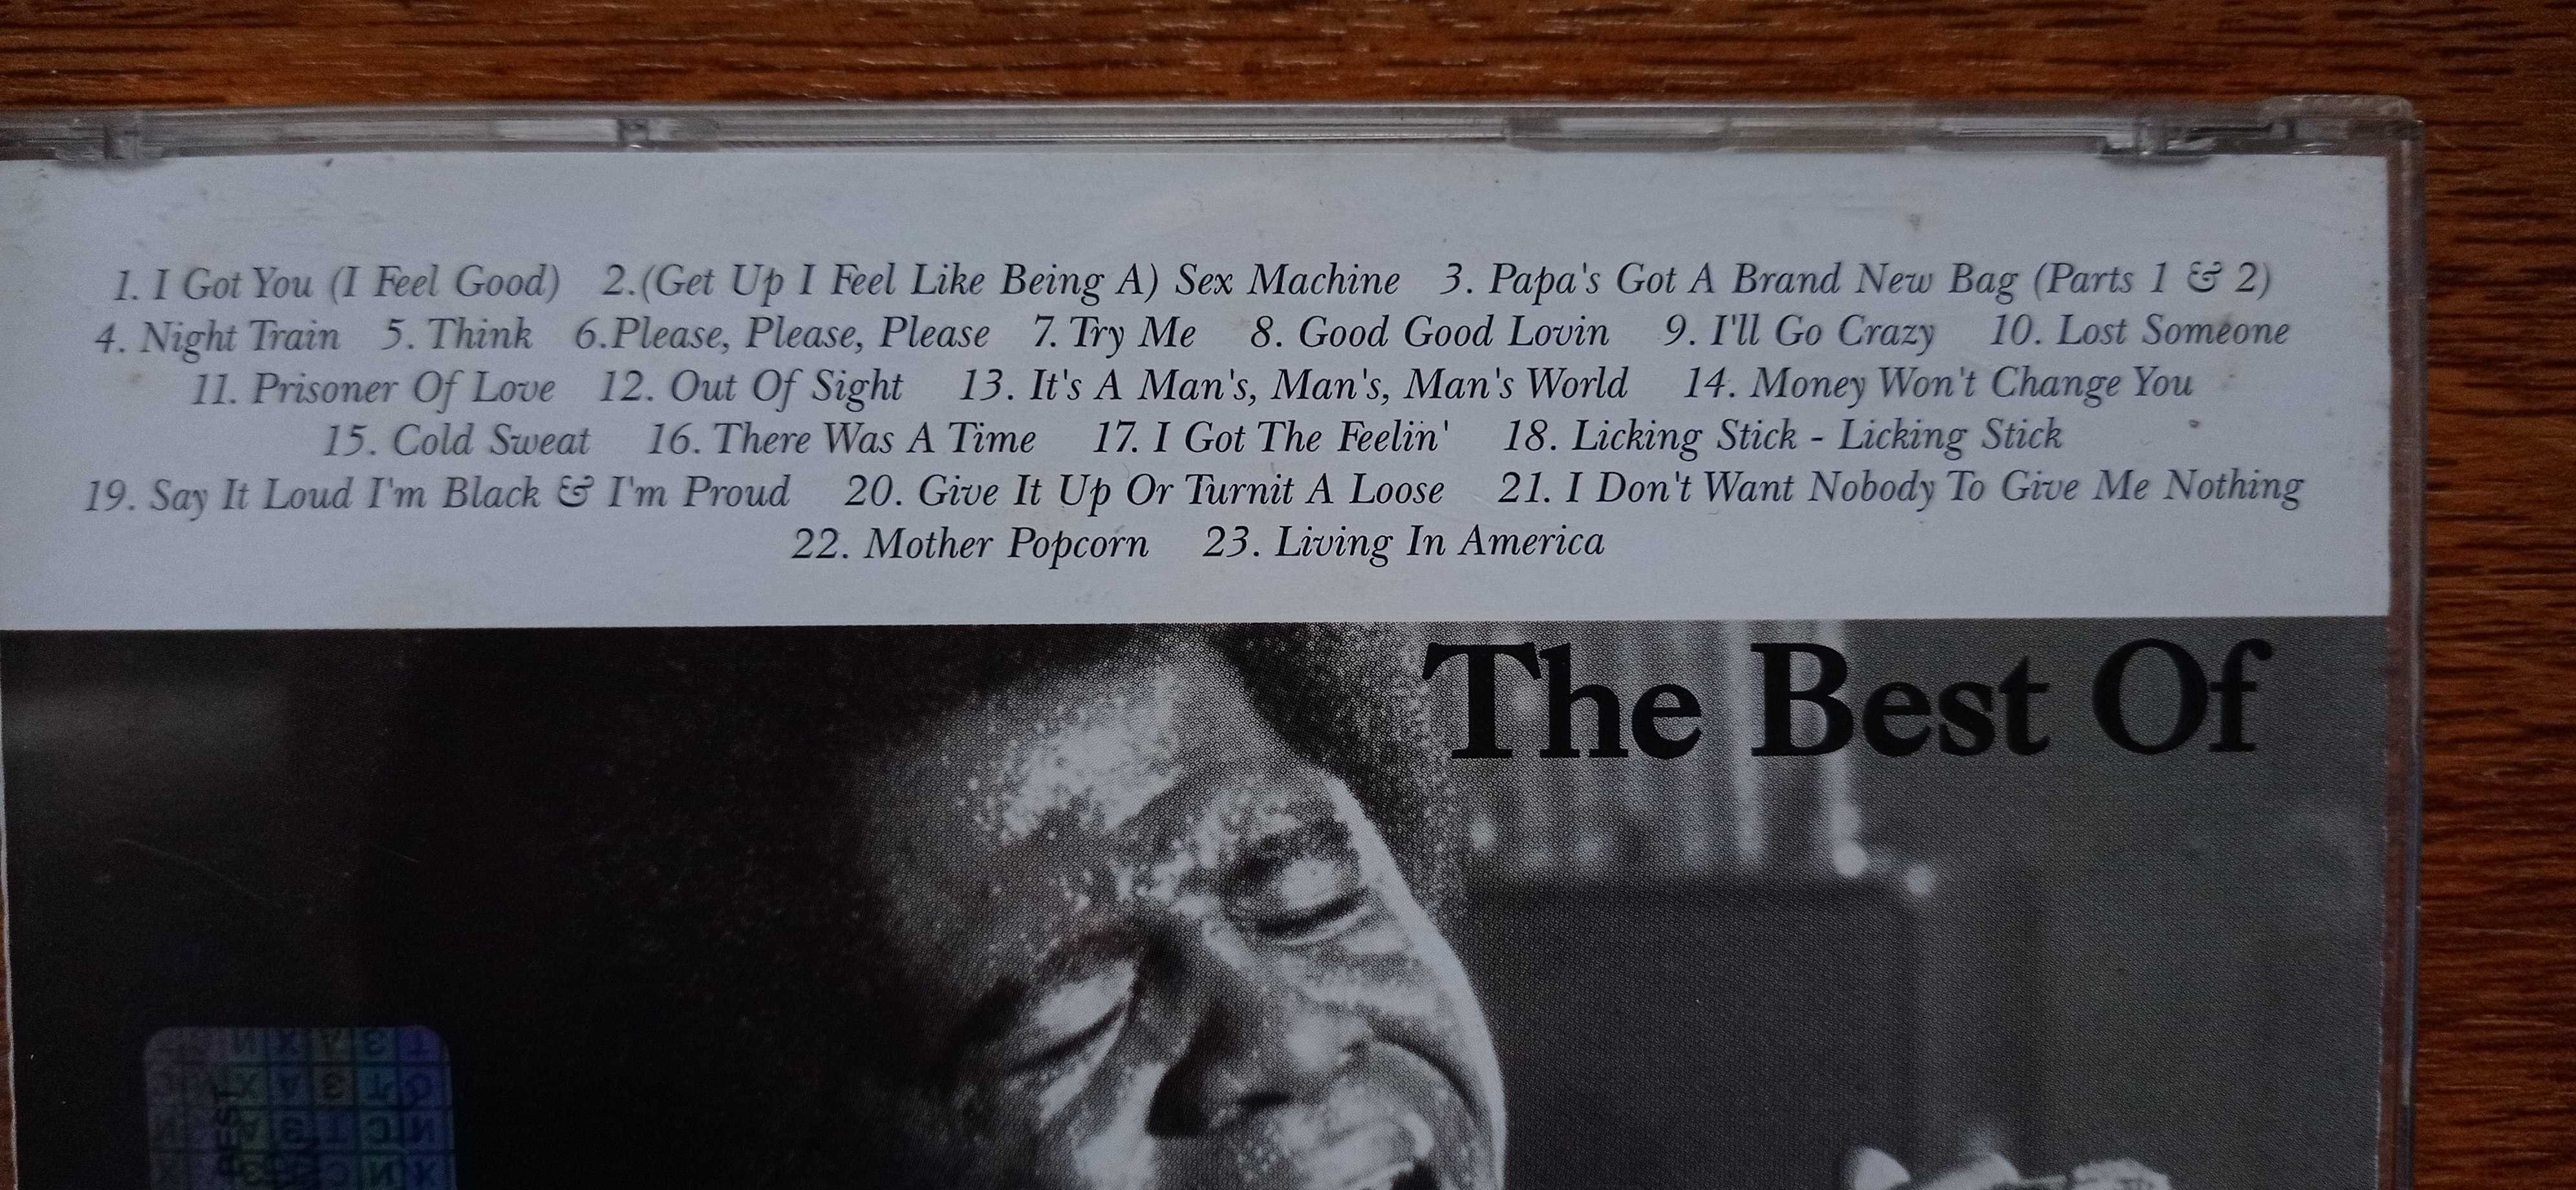 CD James Brown "The best of"- 20 zł